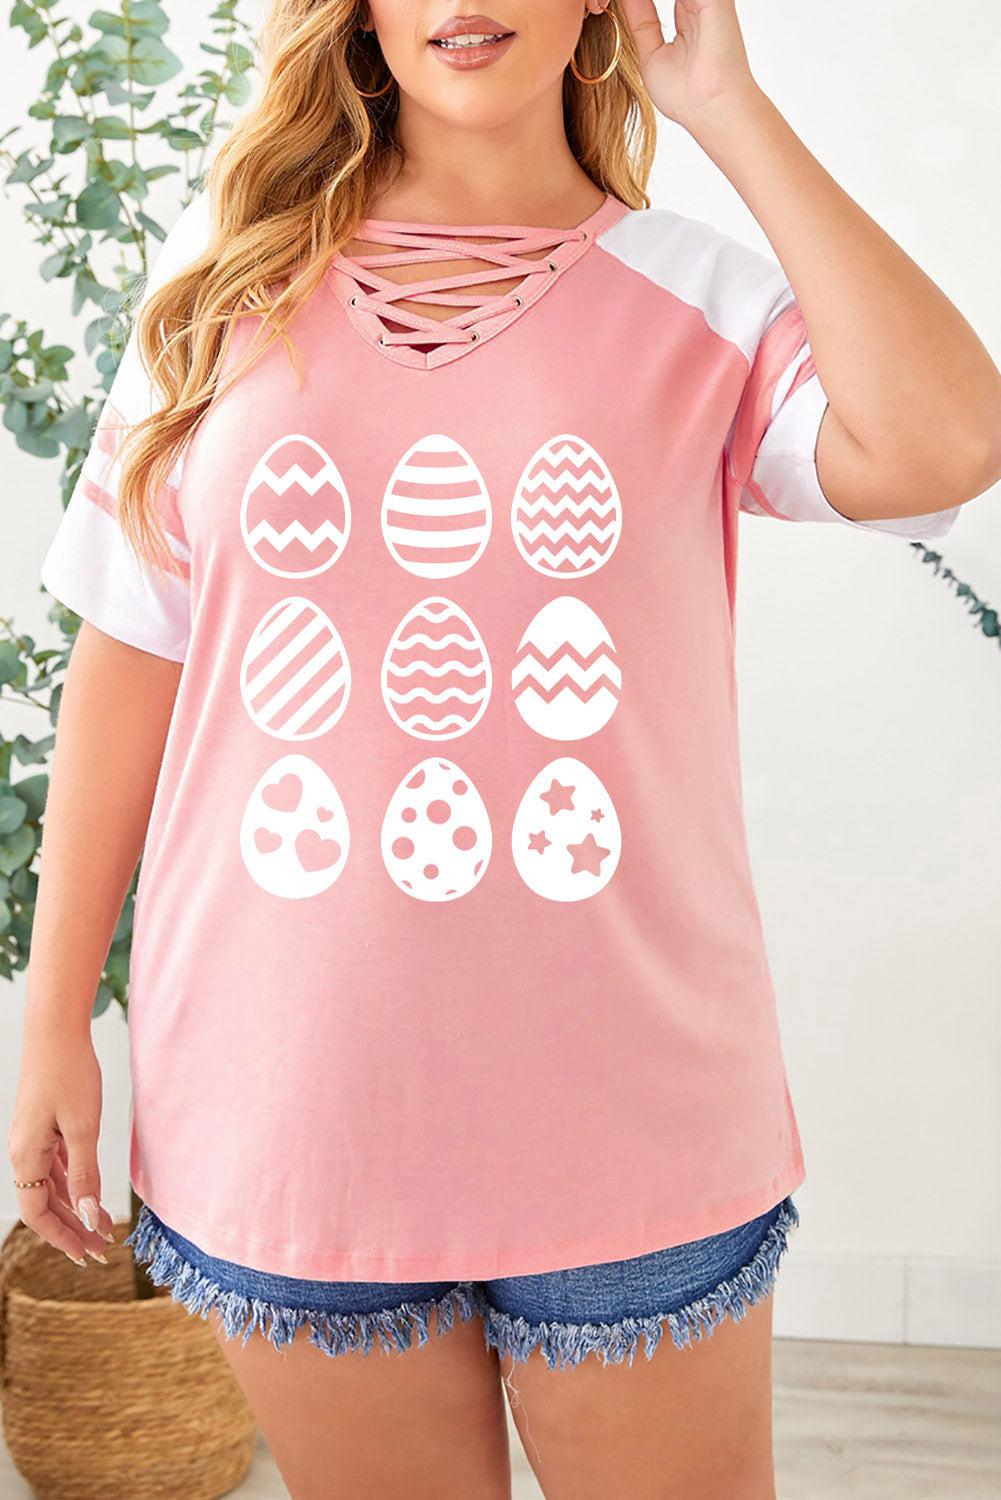 Plus Size Easter Egg Graphic Crisscross Tee Shirt BLUE ZONE PLANET